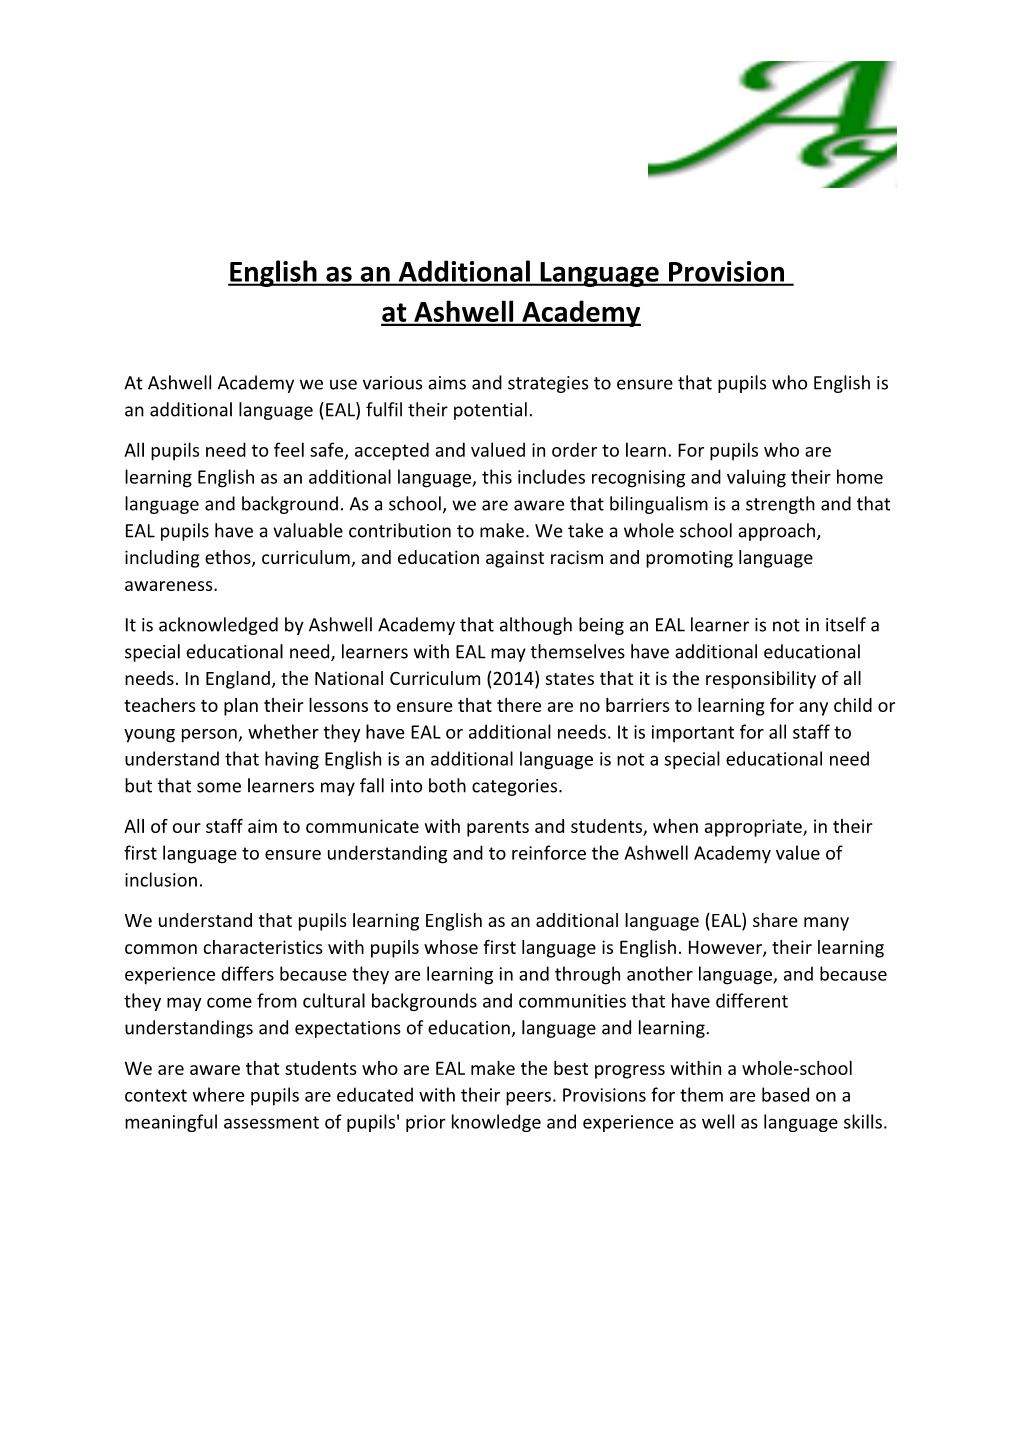 English As an Additional Language Provision at Ashwell Academy